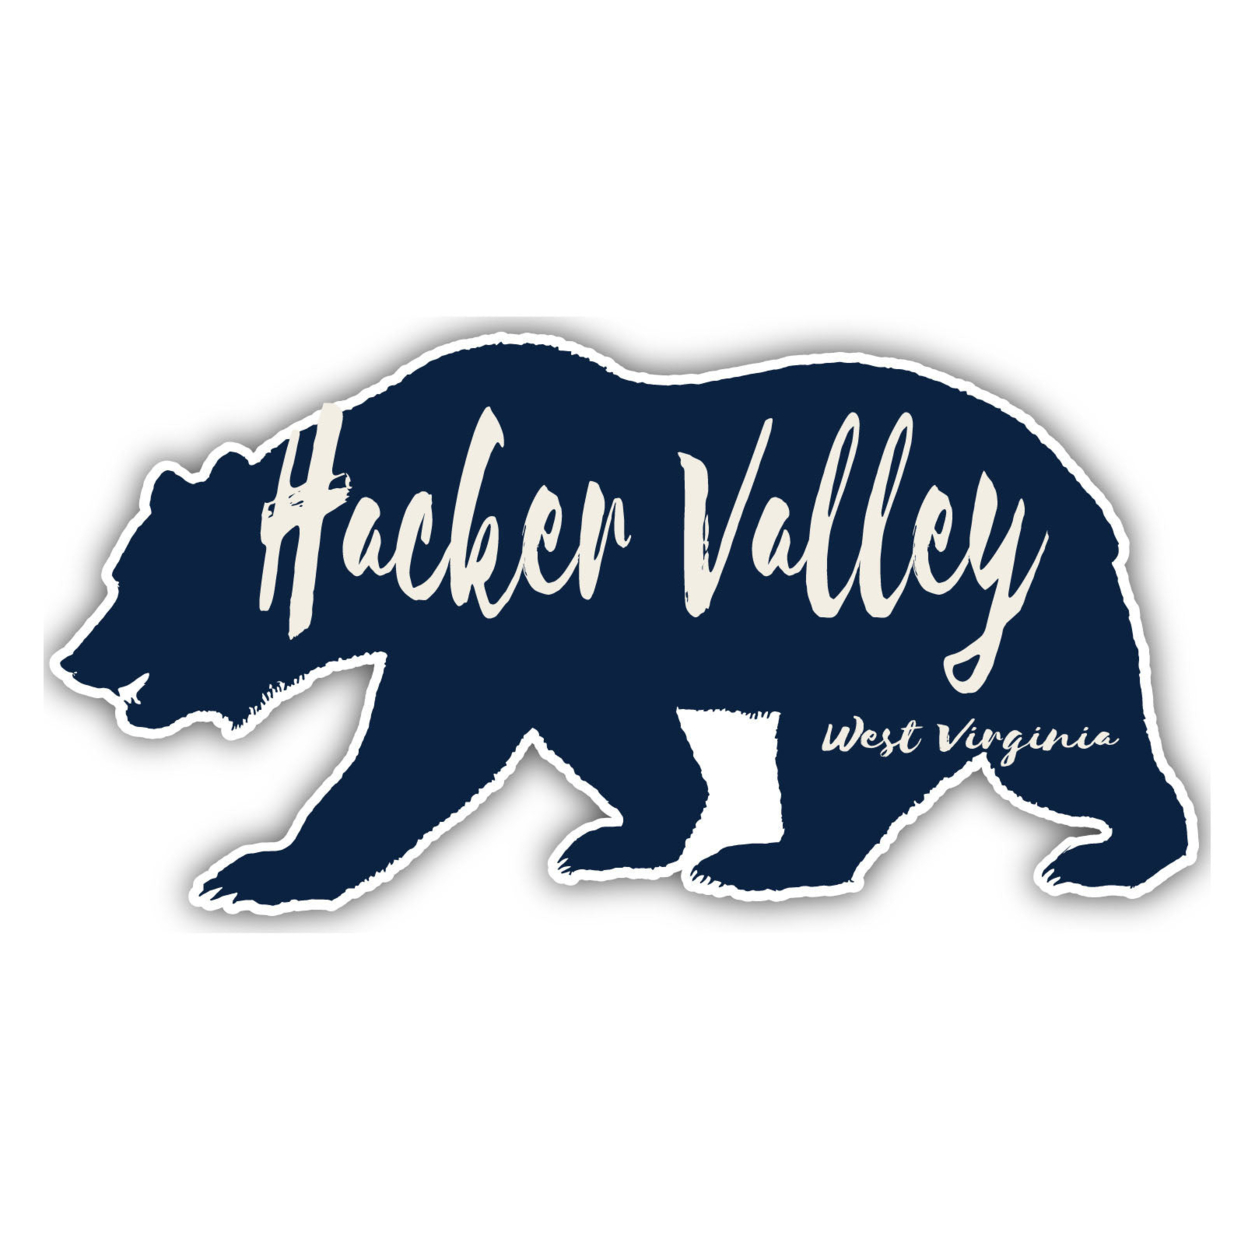 Hacker Valley West Virginia Souvenir Decorative Stickers (Choose Theme And Size) - Single Unit, 6-Inch, Bear